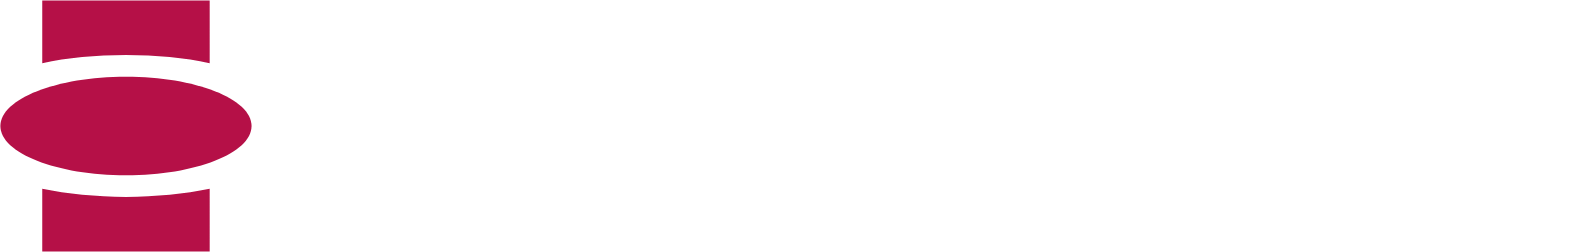 Eckert & Ziegler logo large for dark backgrounds (transparent PNG)